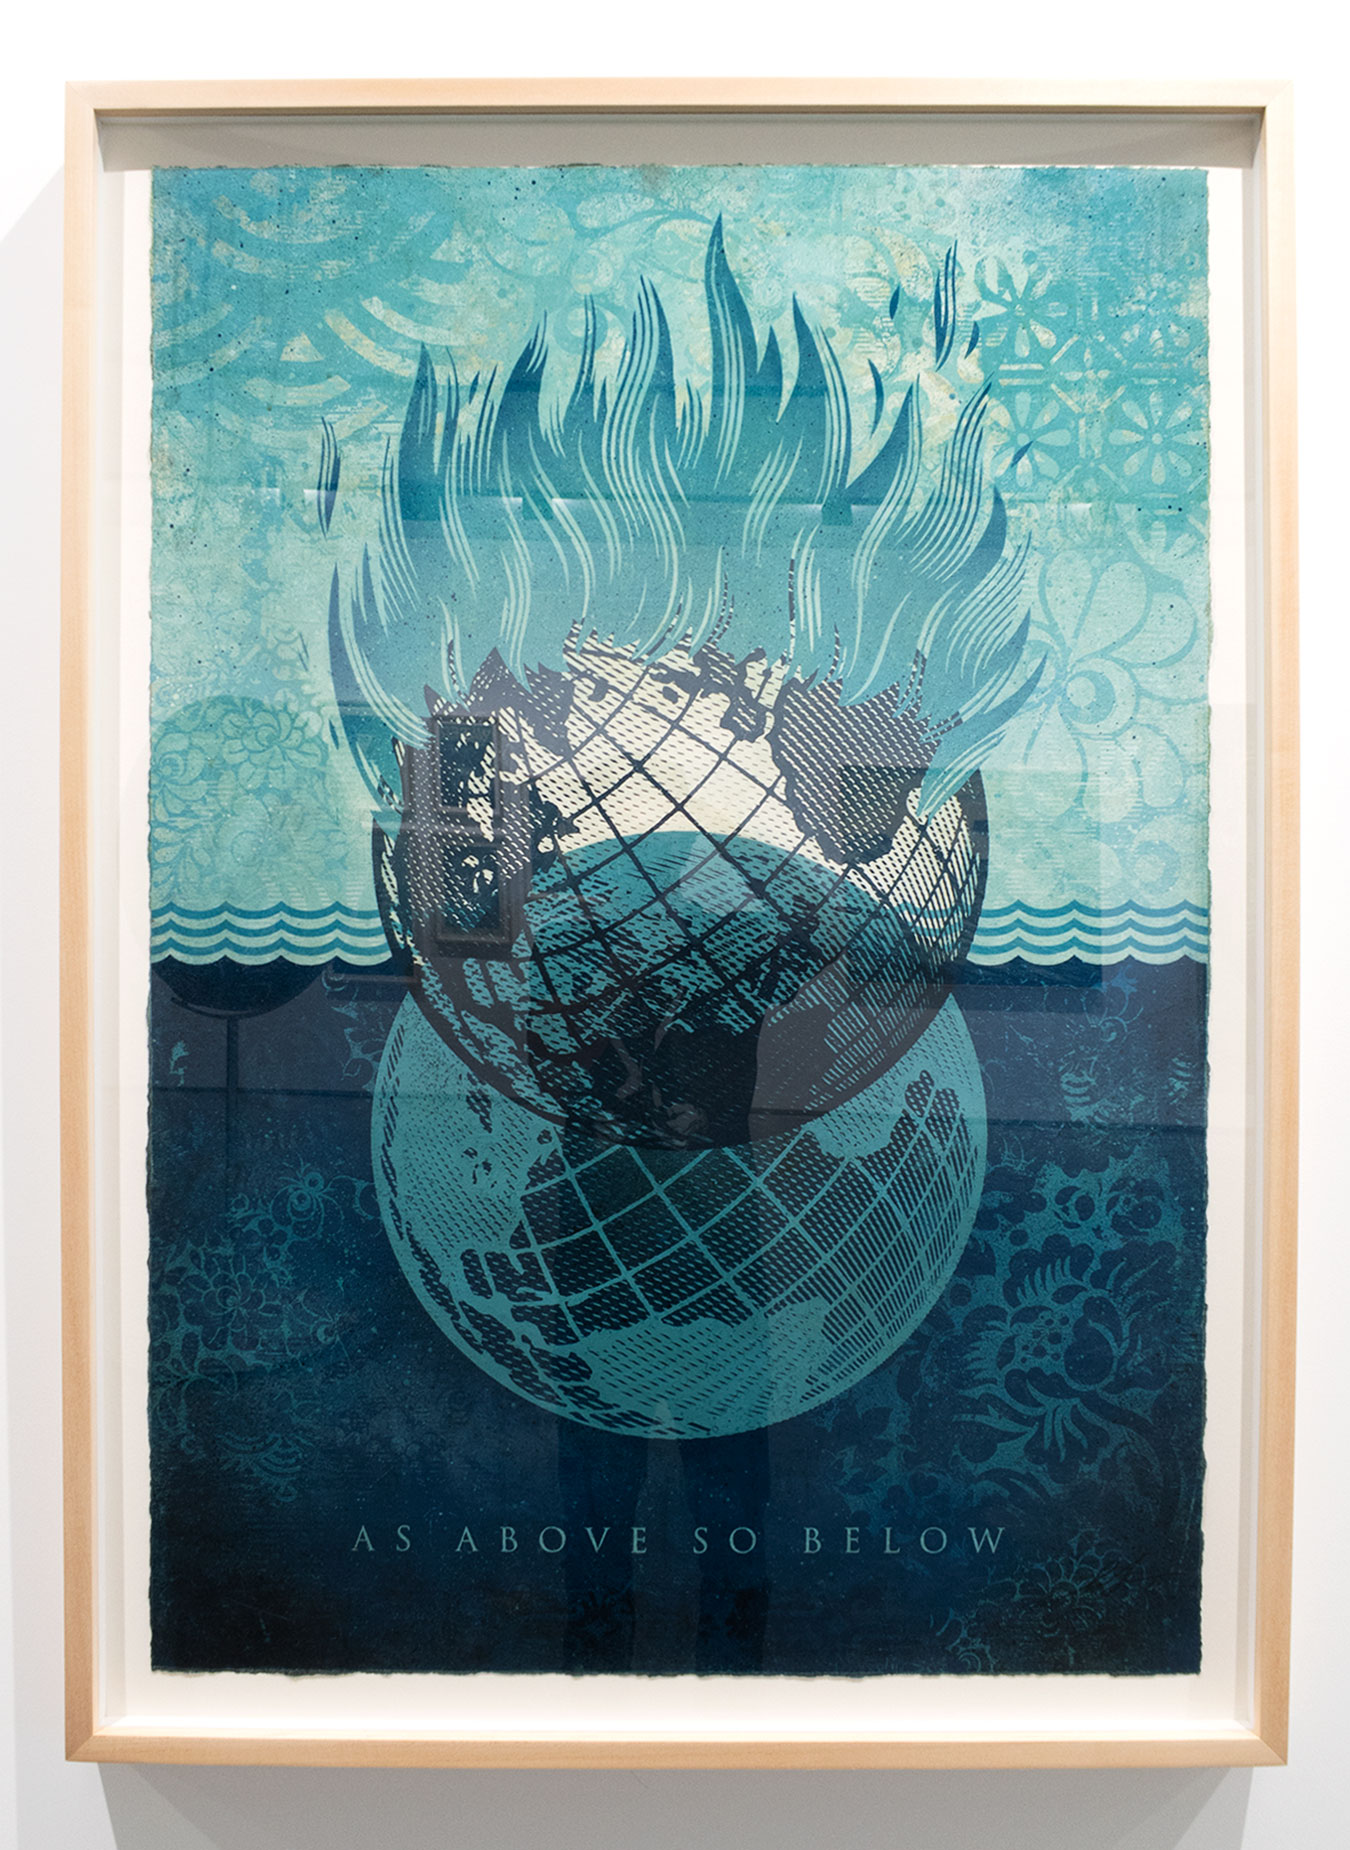 As Above So Below / Earth Crisis Exhibition / Shepard Fairey 2016